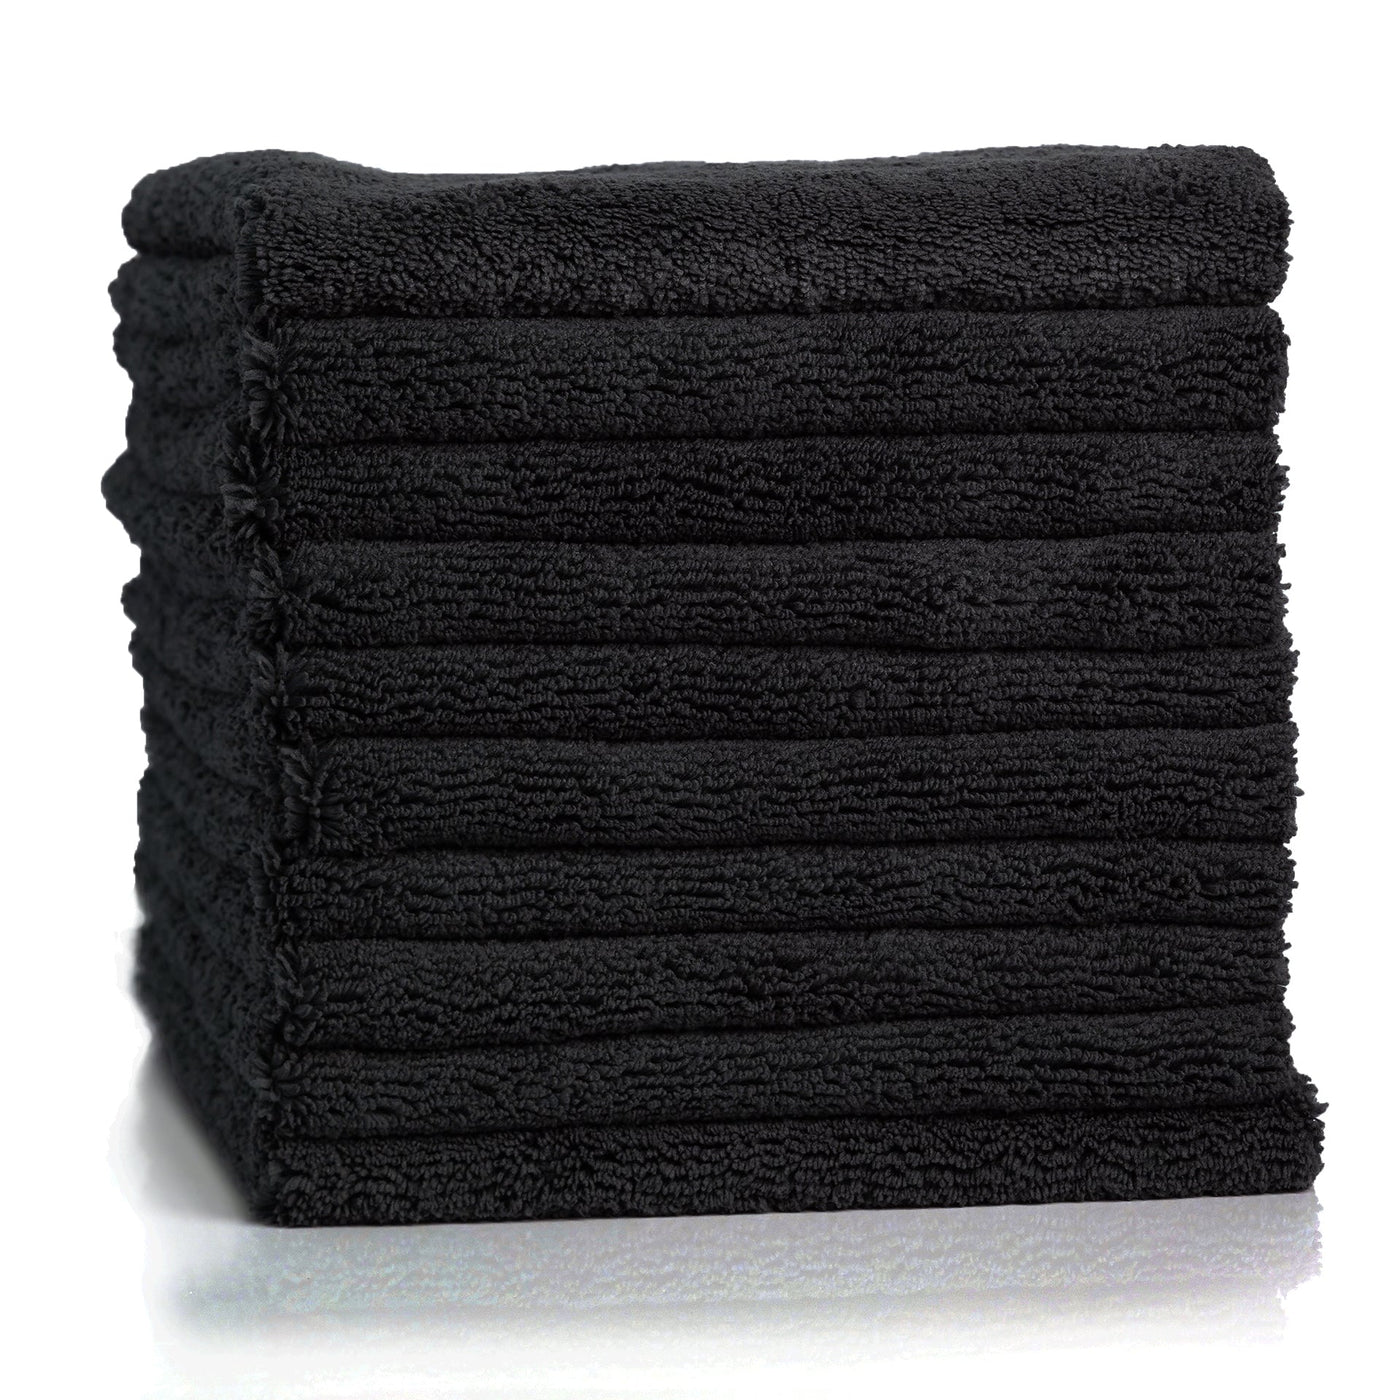 460 GSM Edgeless Microfiber Towel - Black